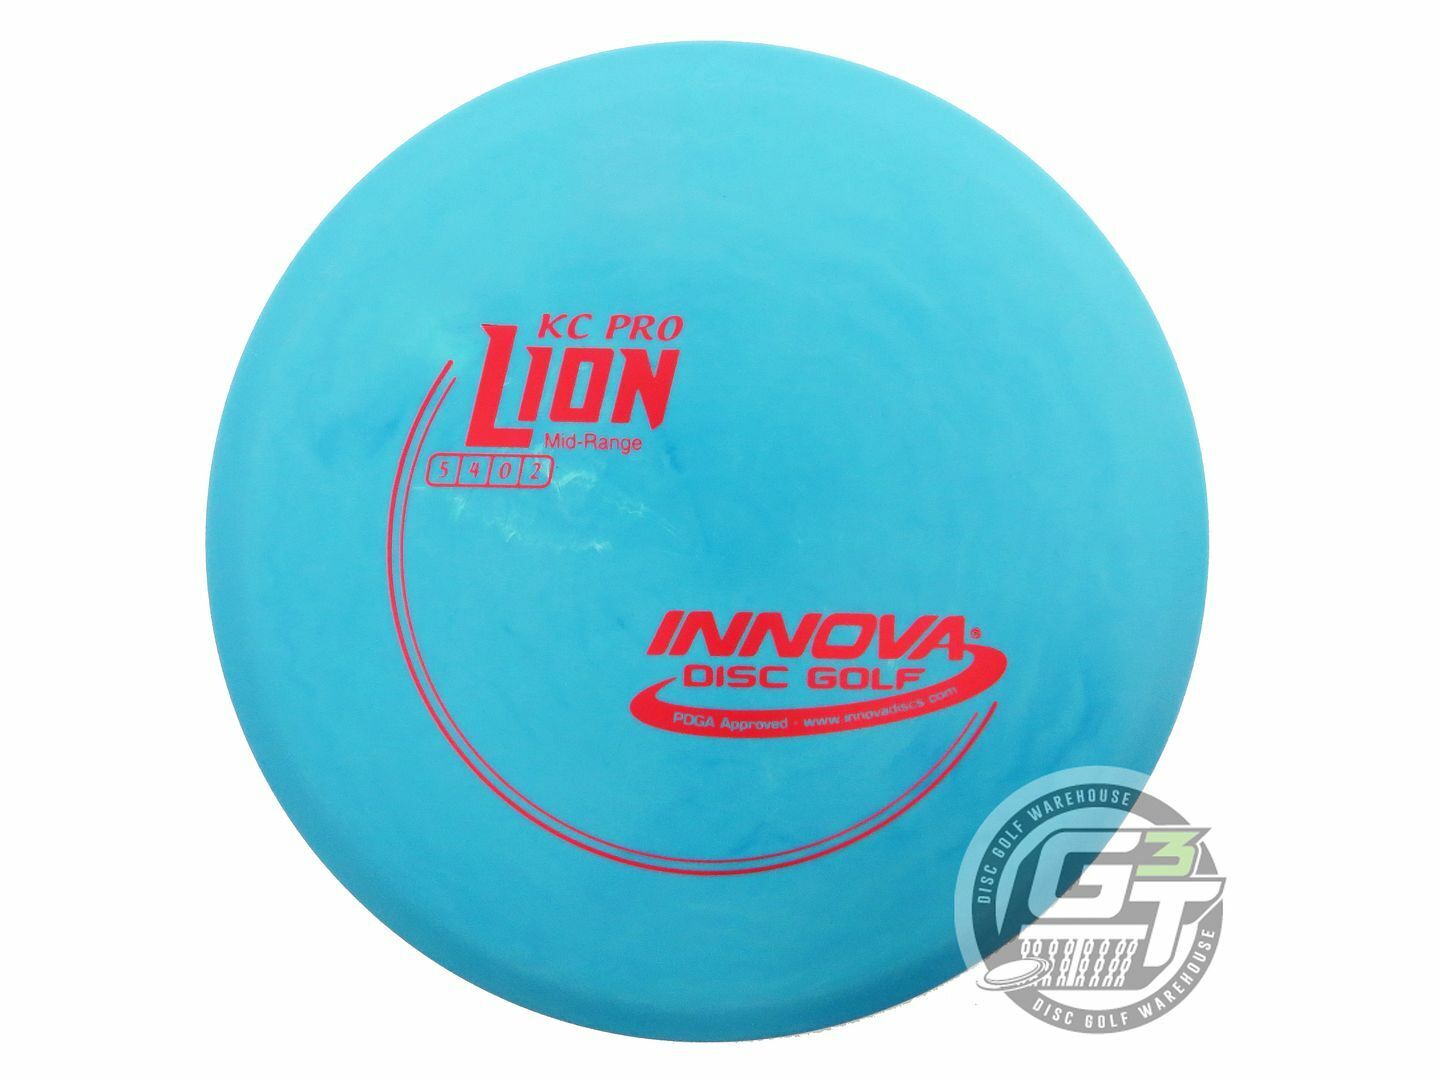 Innova Pro KC Lion Midrange Golf Disc (Individually Listed)